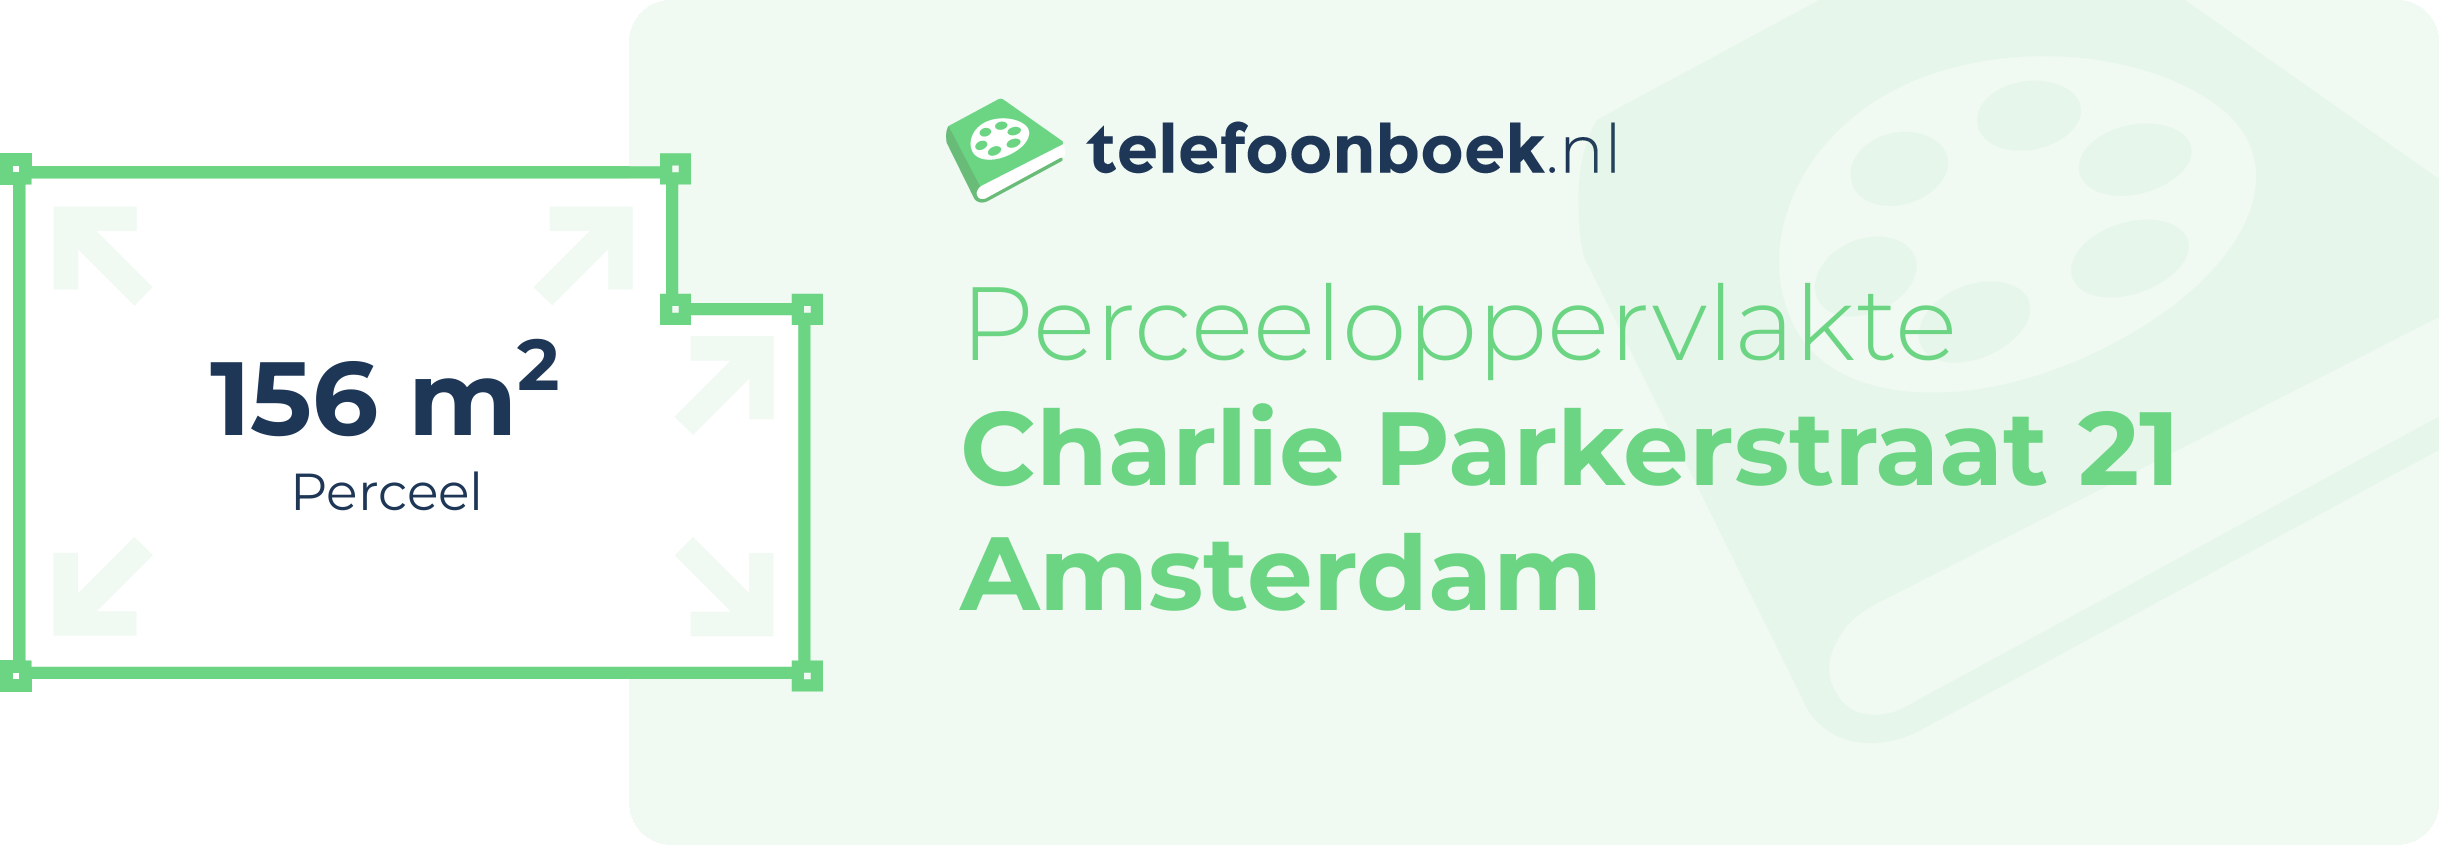 Perceeloppervlakte Charlie Parkerstraat 21 Amsterdam